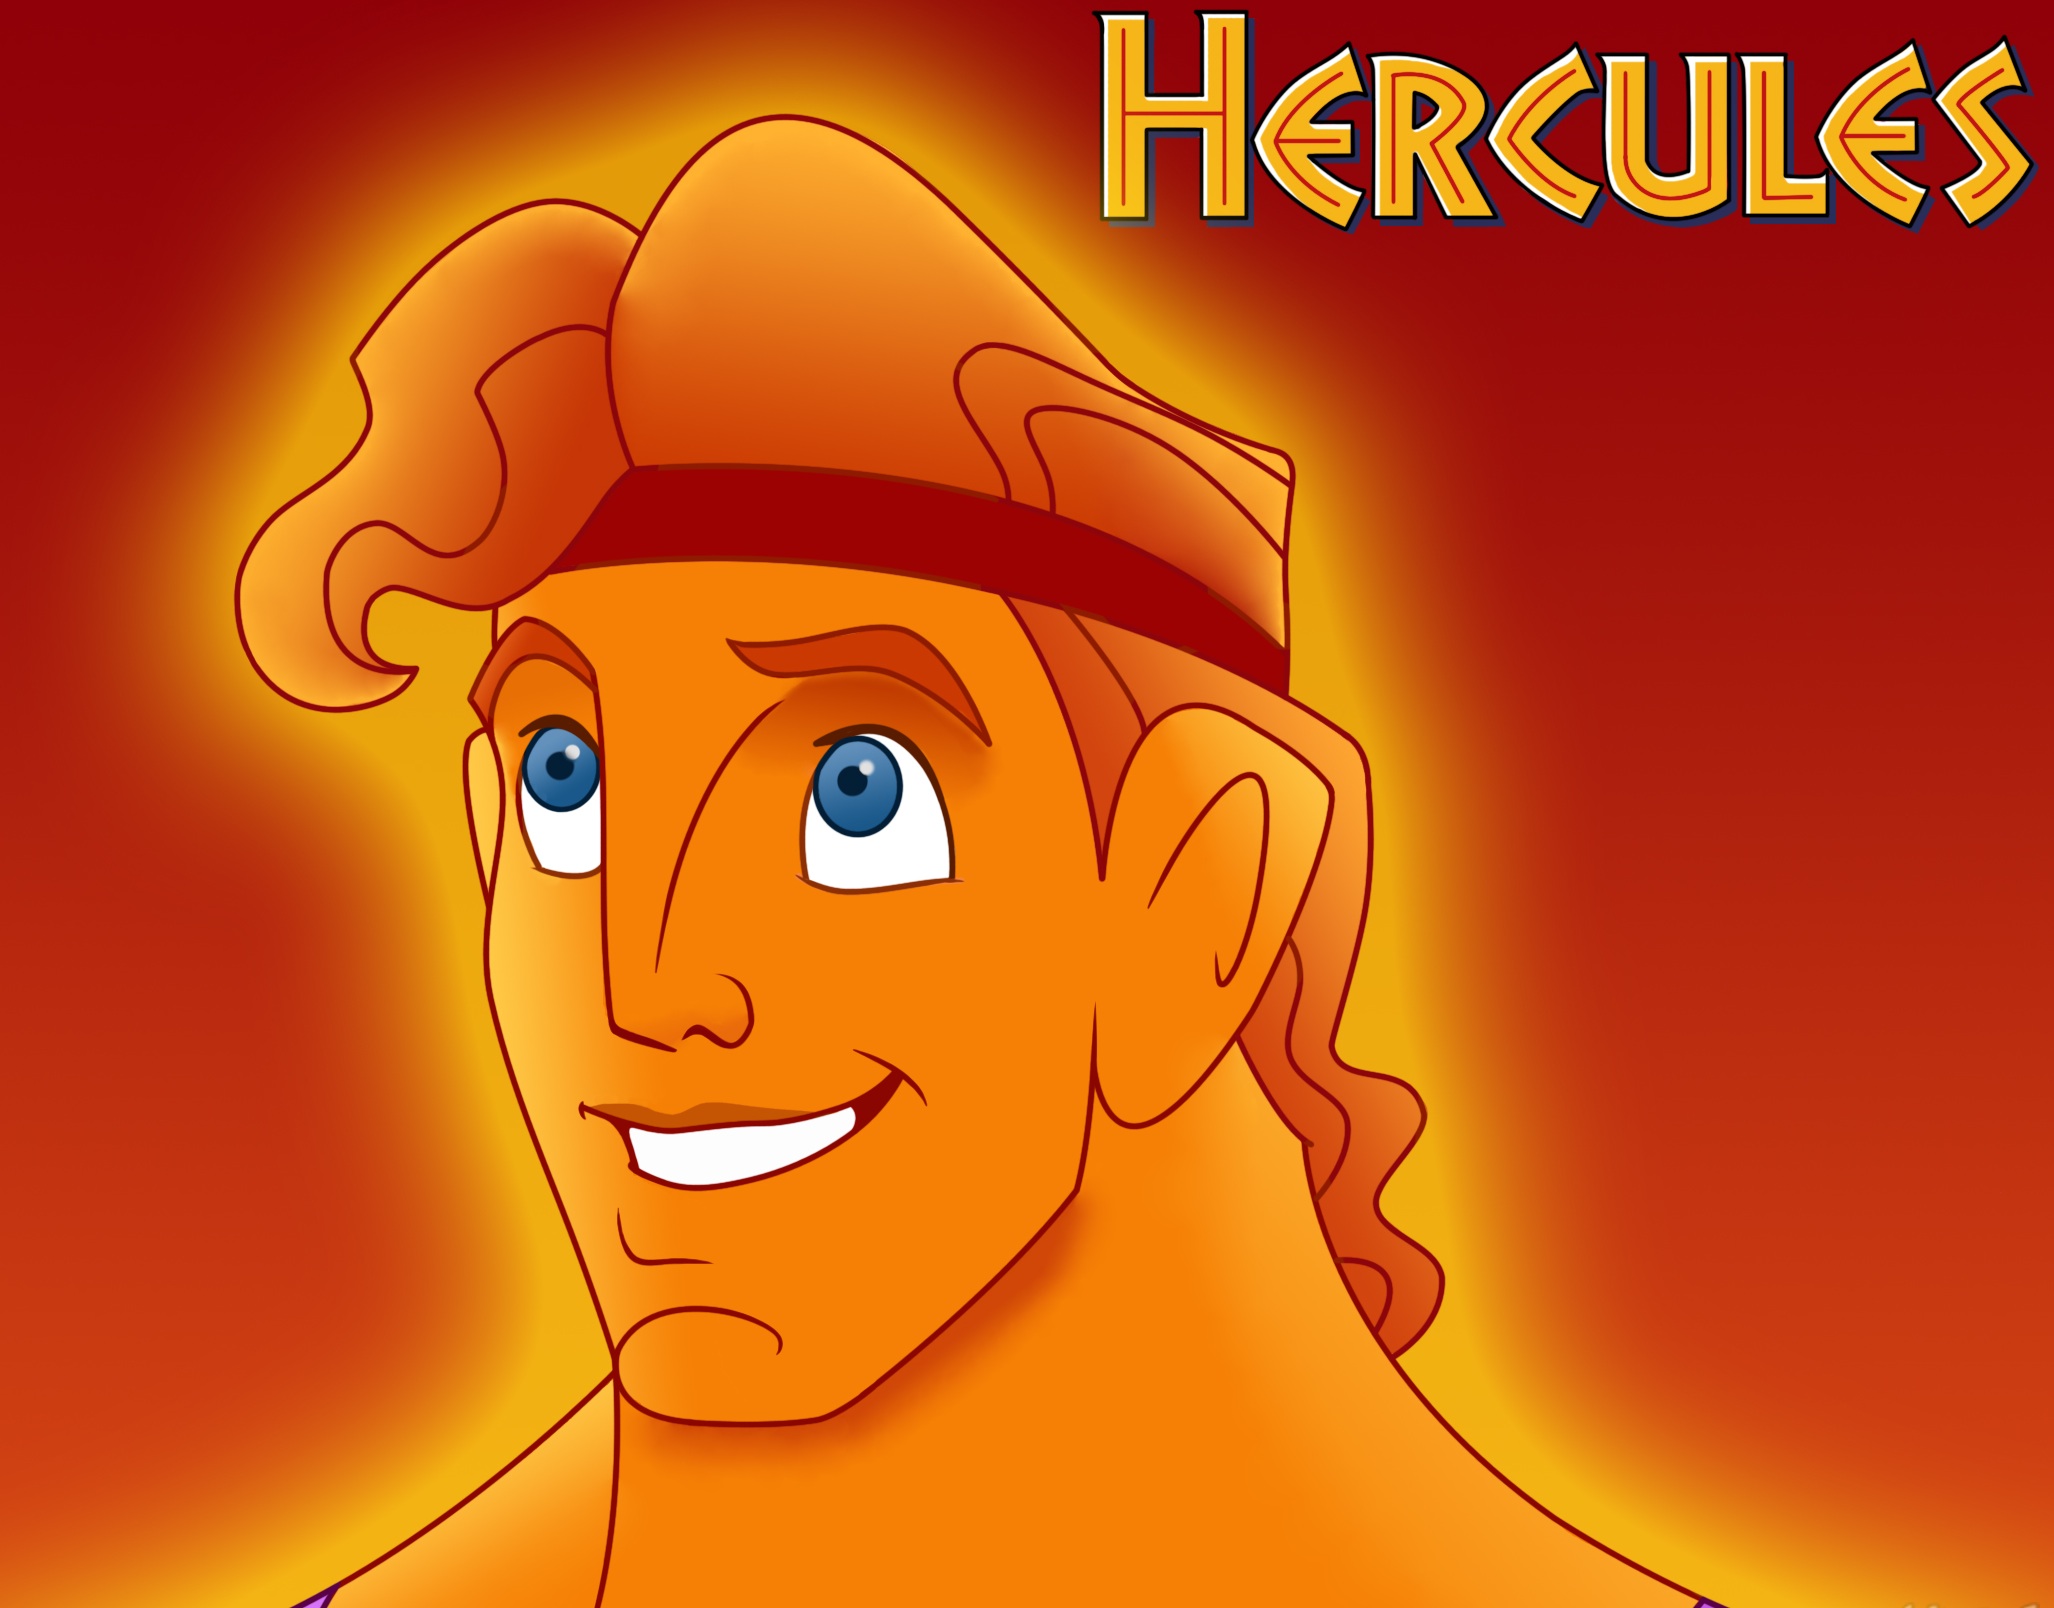 Hercules (1997) Backgrounds, Compatible - PC, Mobile, Gadgets| 2054x1608 px